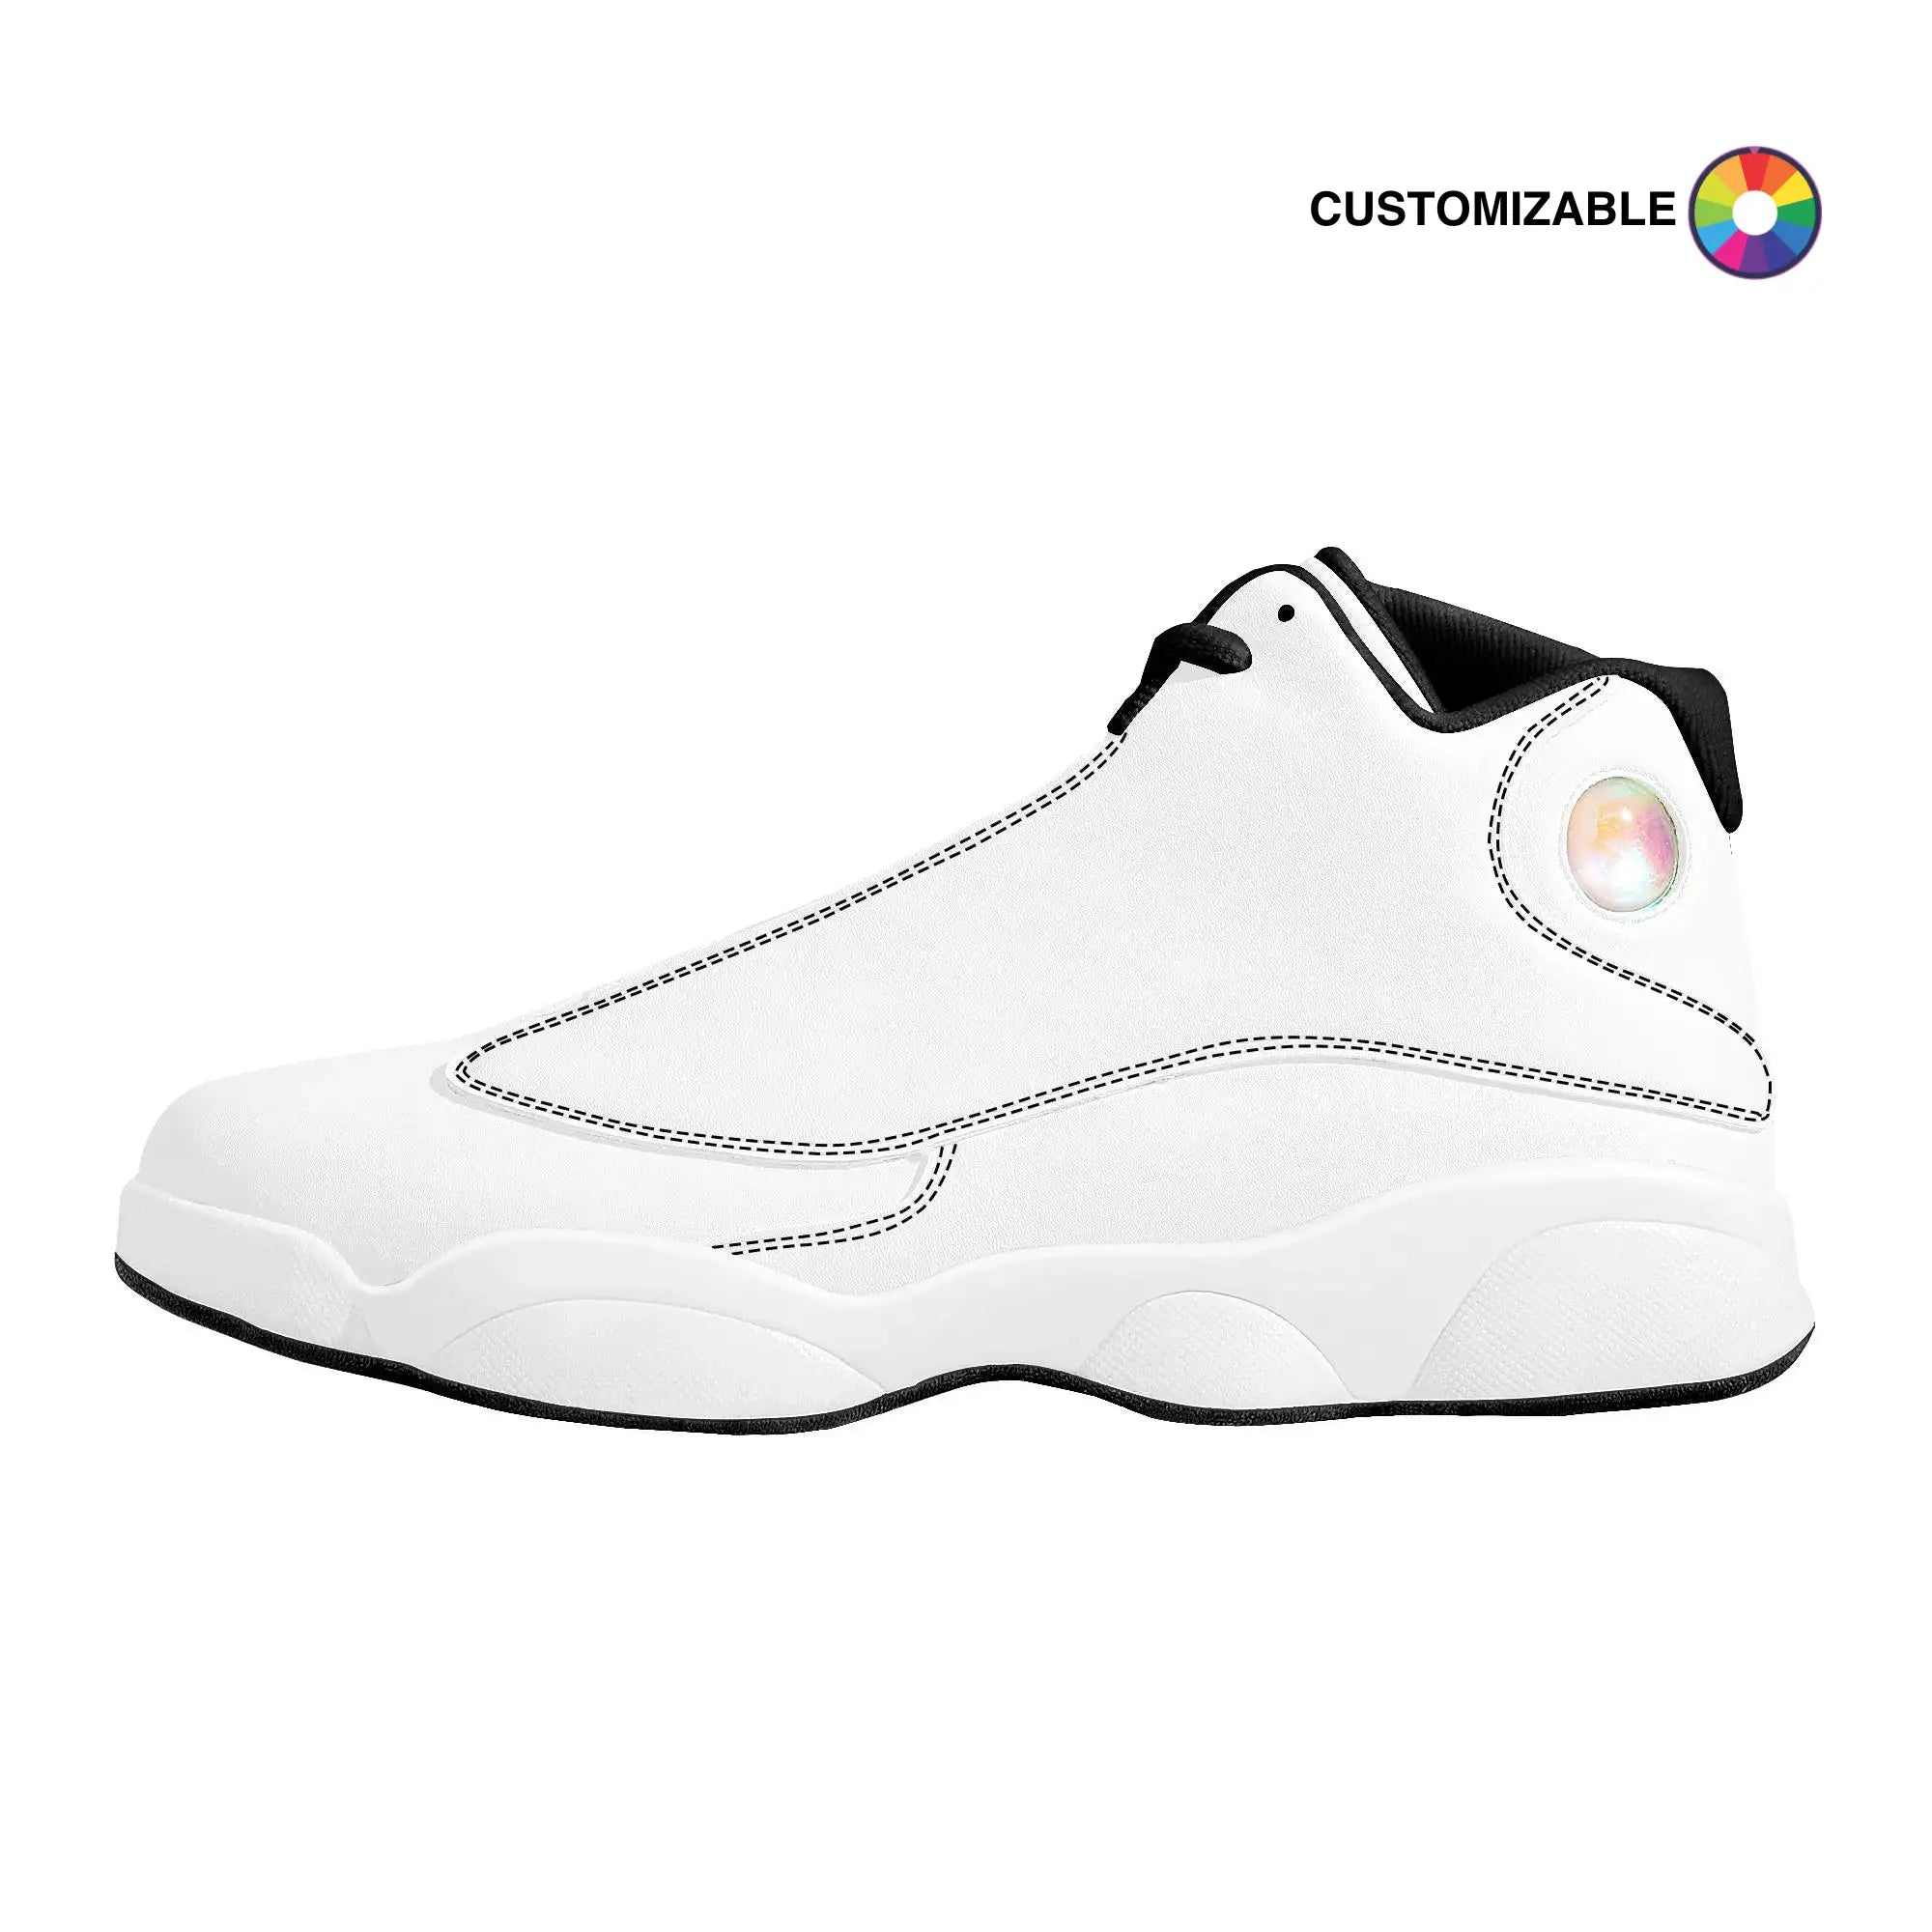 Customizable Basketball Shoes - Black